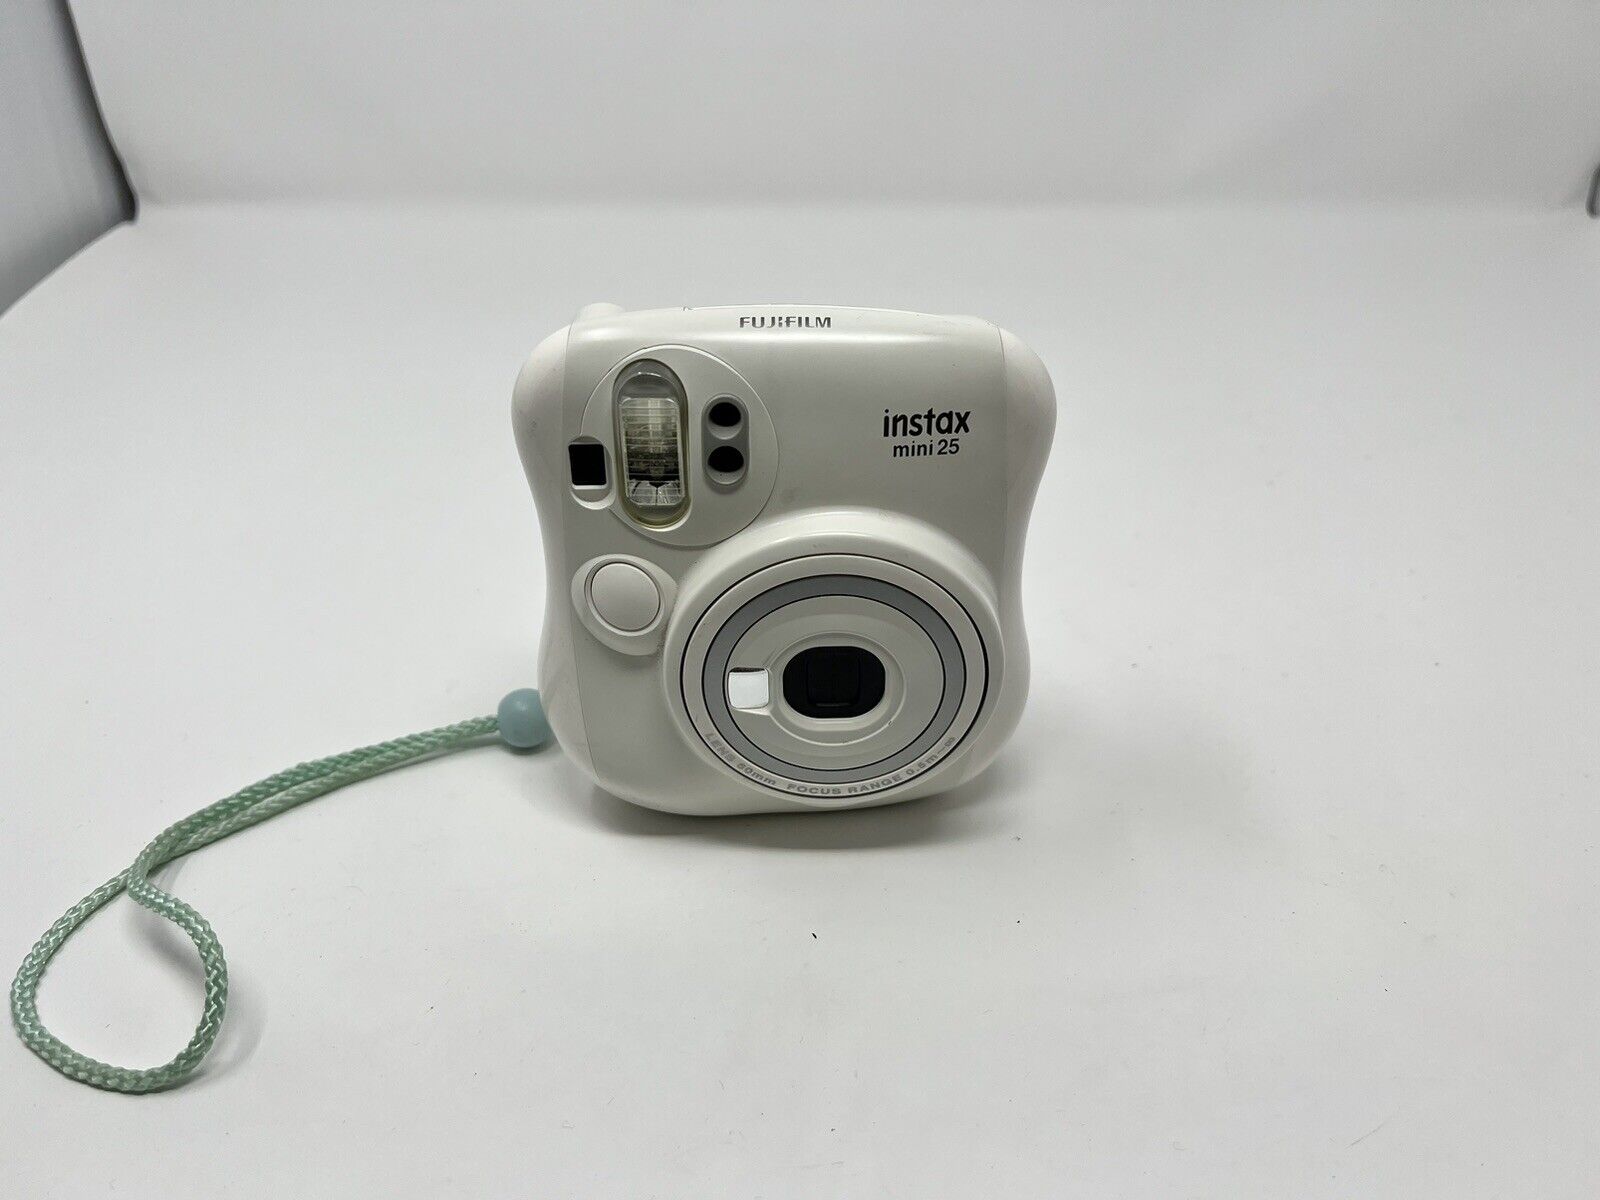 Fujifilm Instax mini 25 Instant Film Camera for sale online | eBay